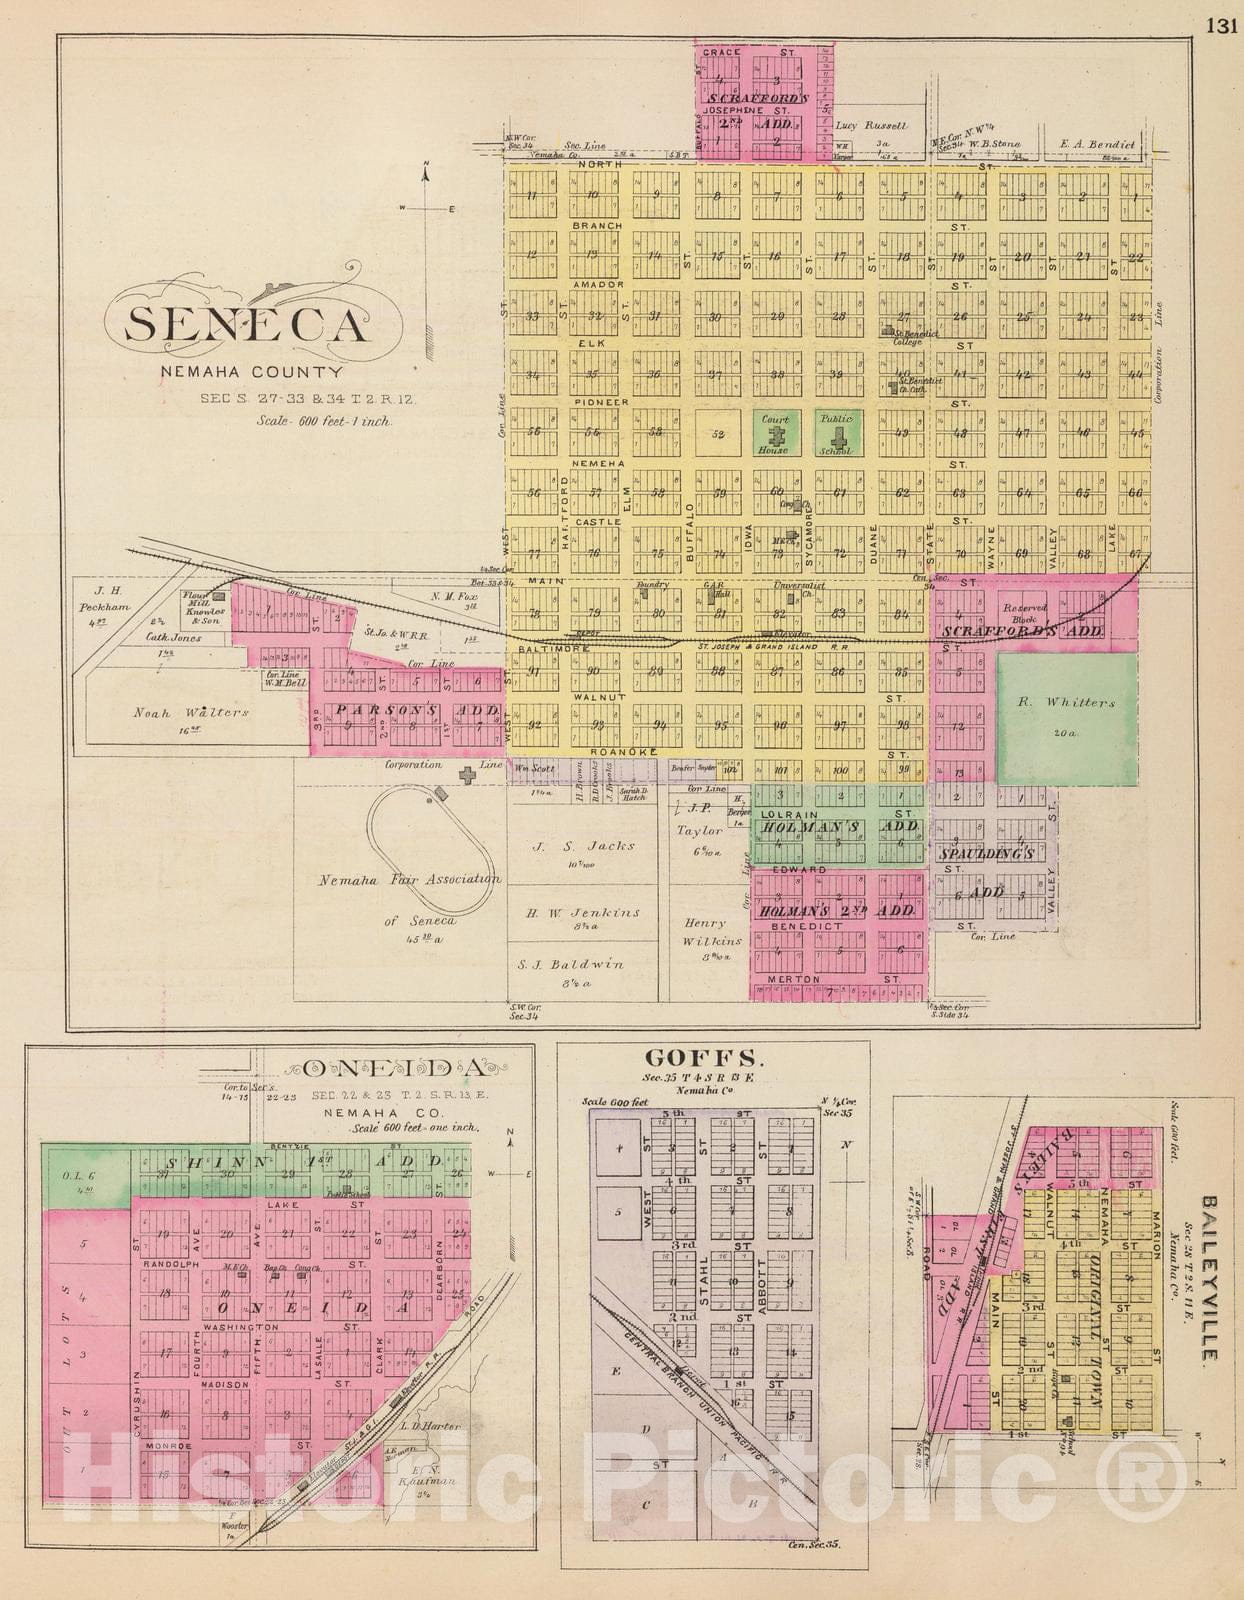 Historic Map : 1887 Seneca, Oneida, Goffs, Baileyville. - Vintage Wall Art